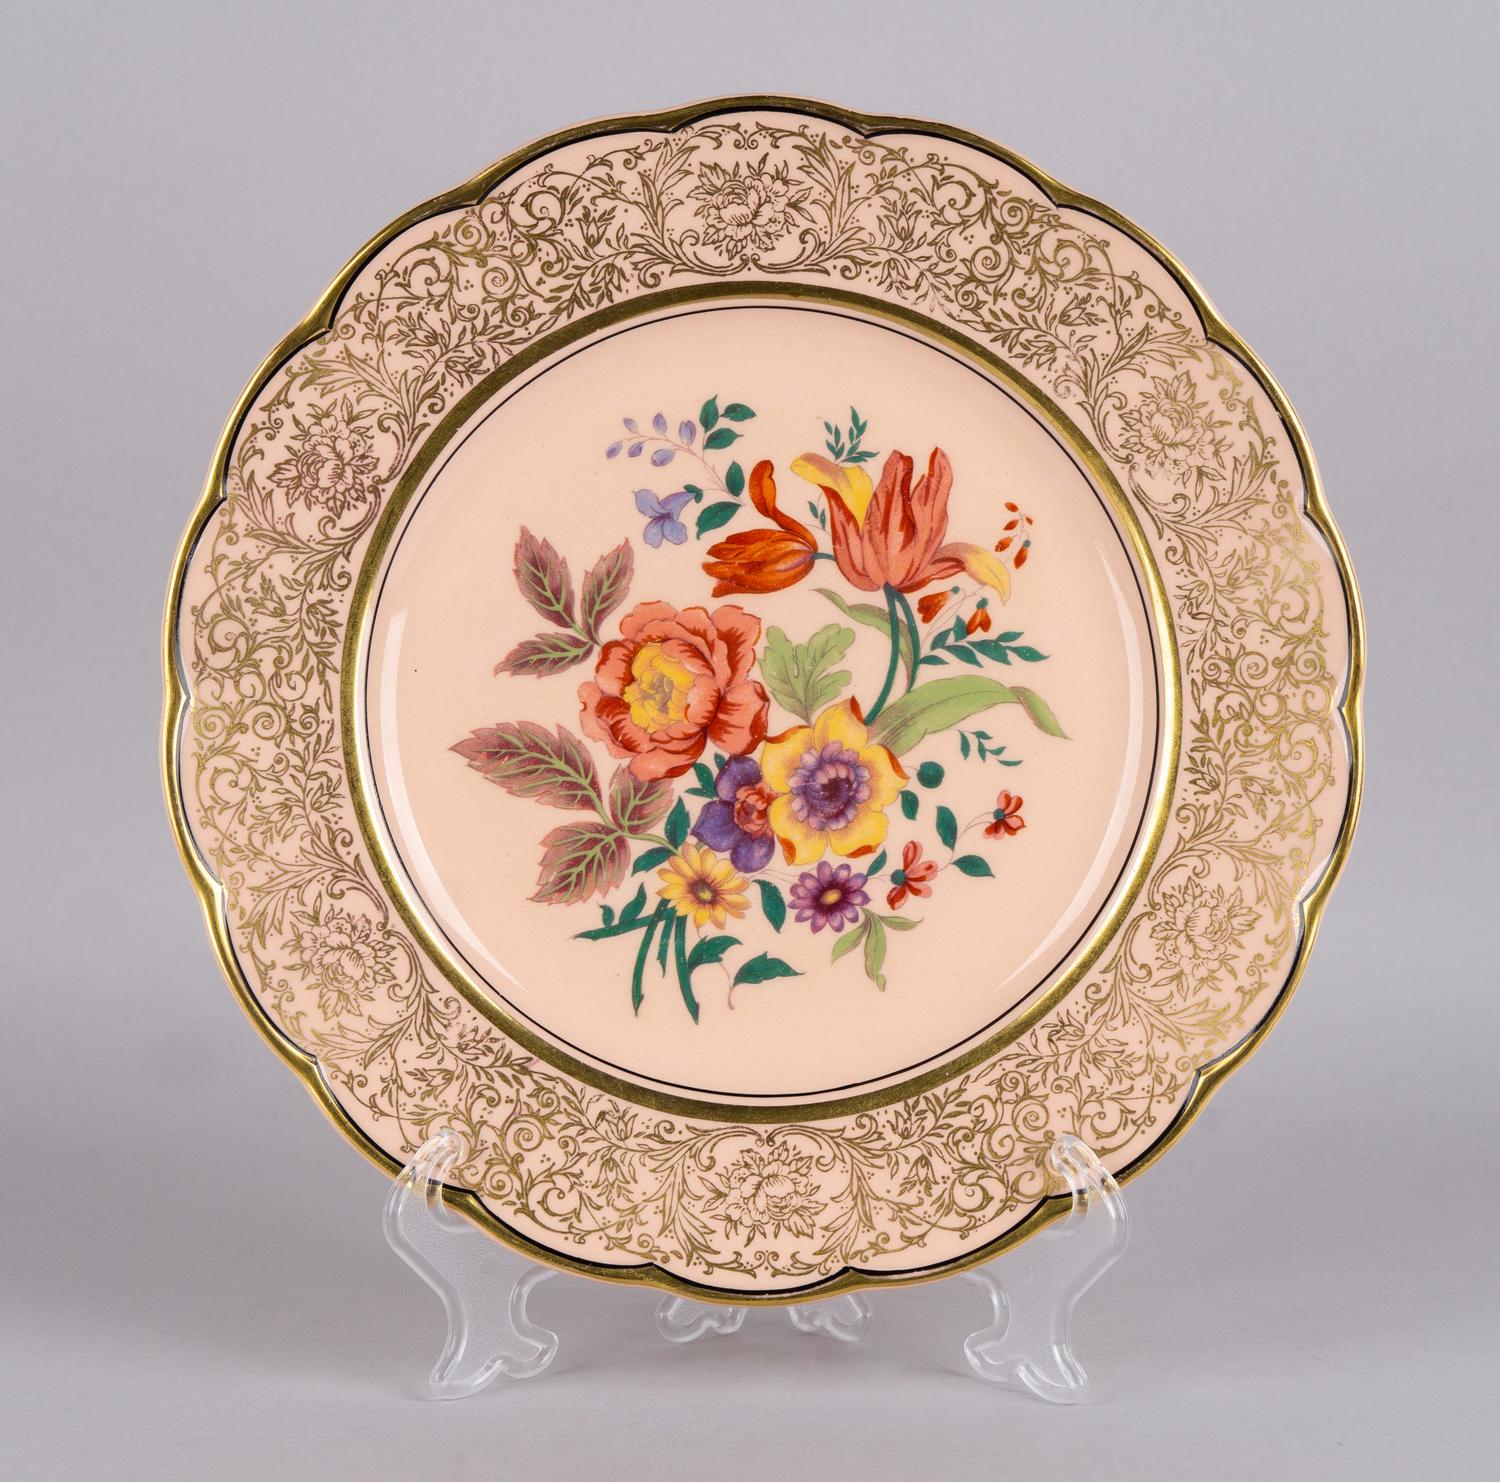 Тарелка «Rosita» с изображением цветов на персиковом фоне.<br>Великобритания, середина XX века.